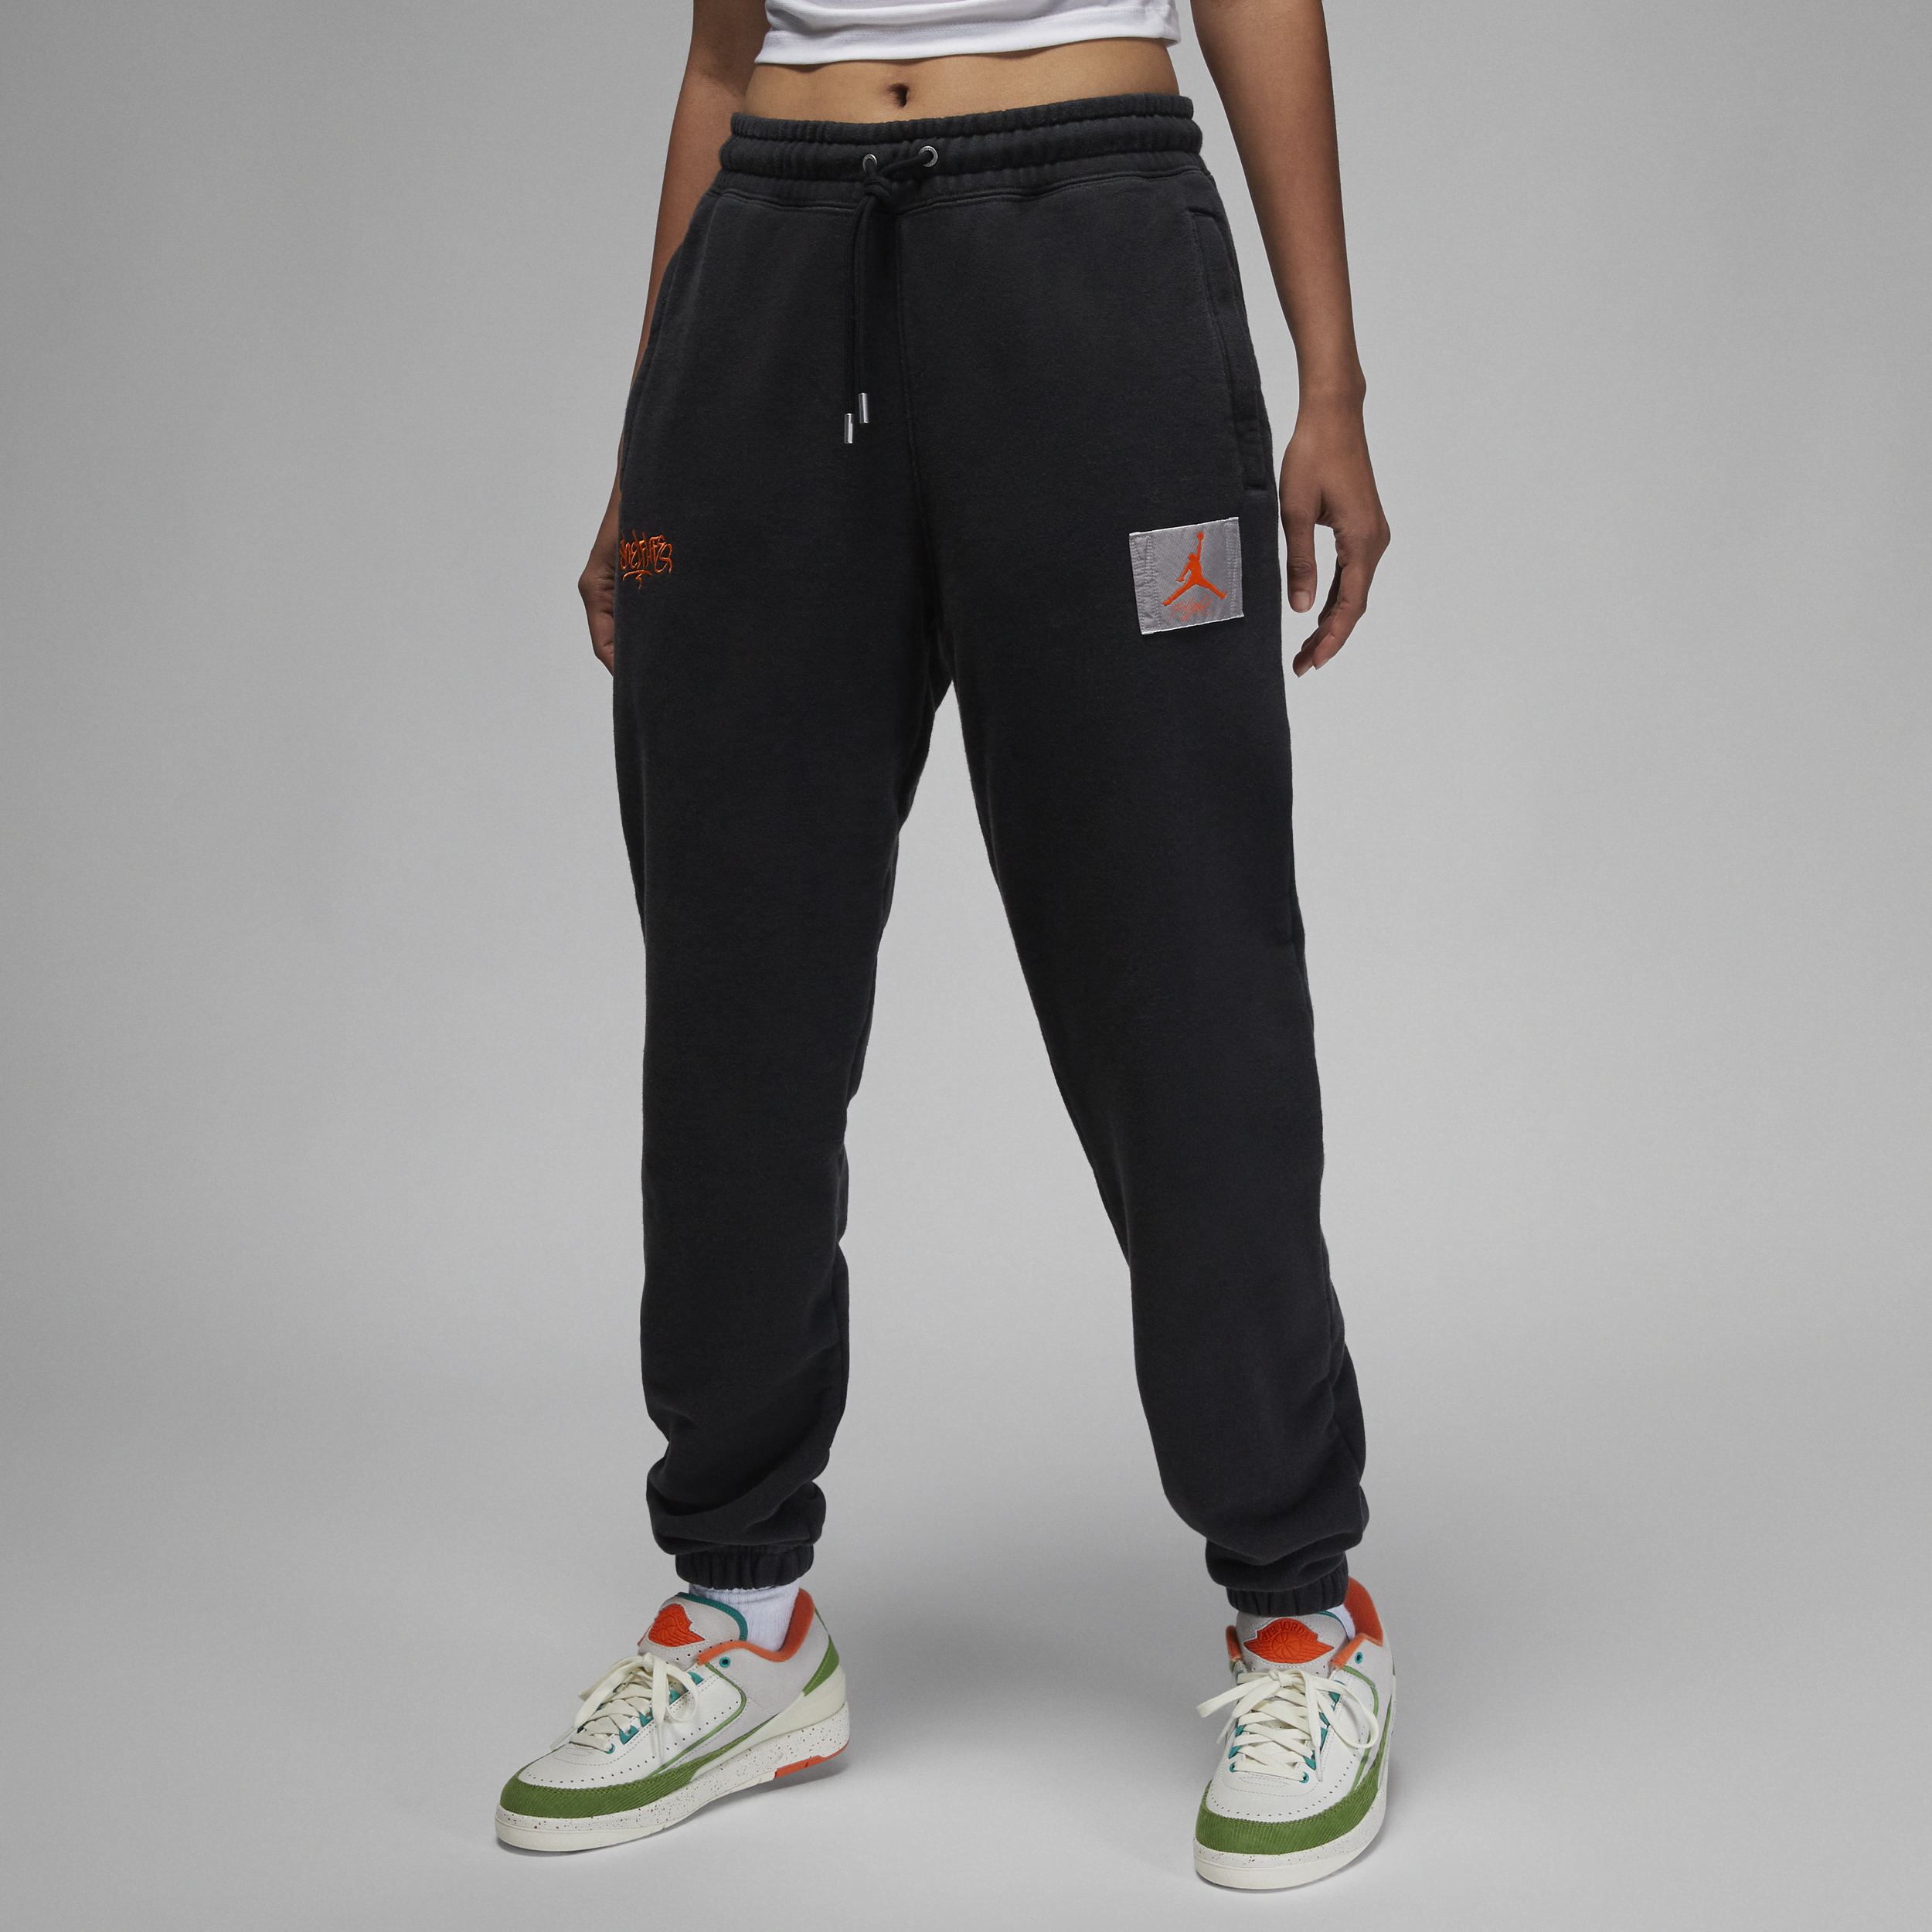 Jordan x Shelflife-bukser til kvinder - sort